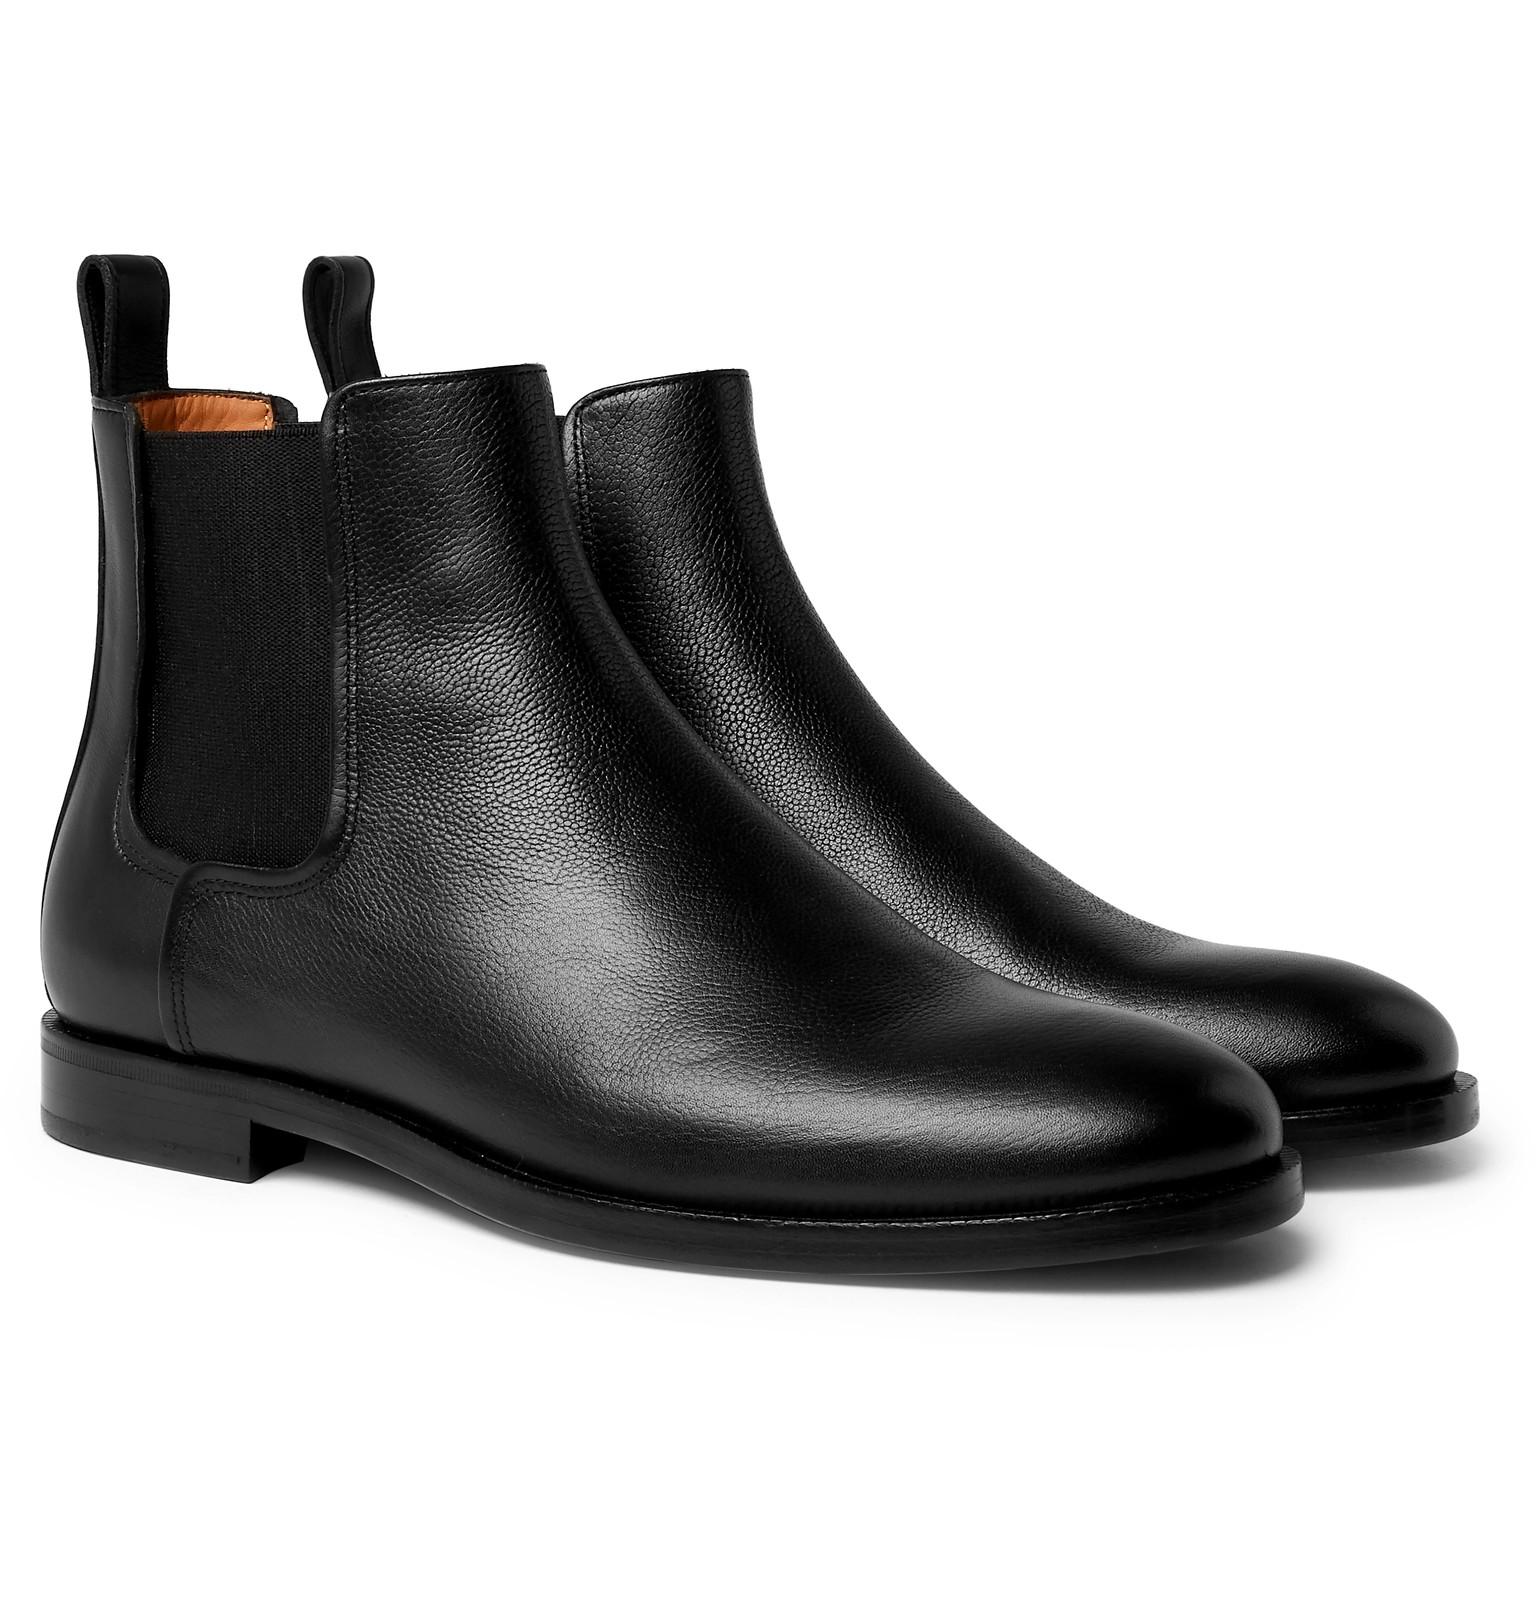 Lanvin Full-grain Leather Chelsea Boots in Black for Men - Lyst